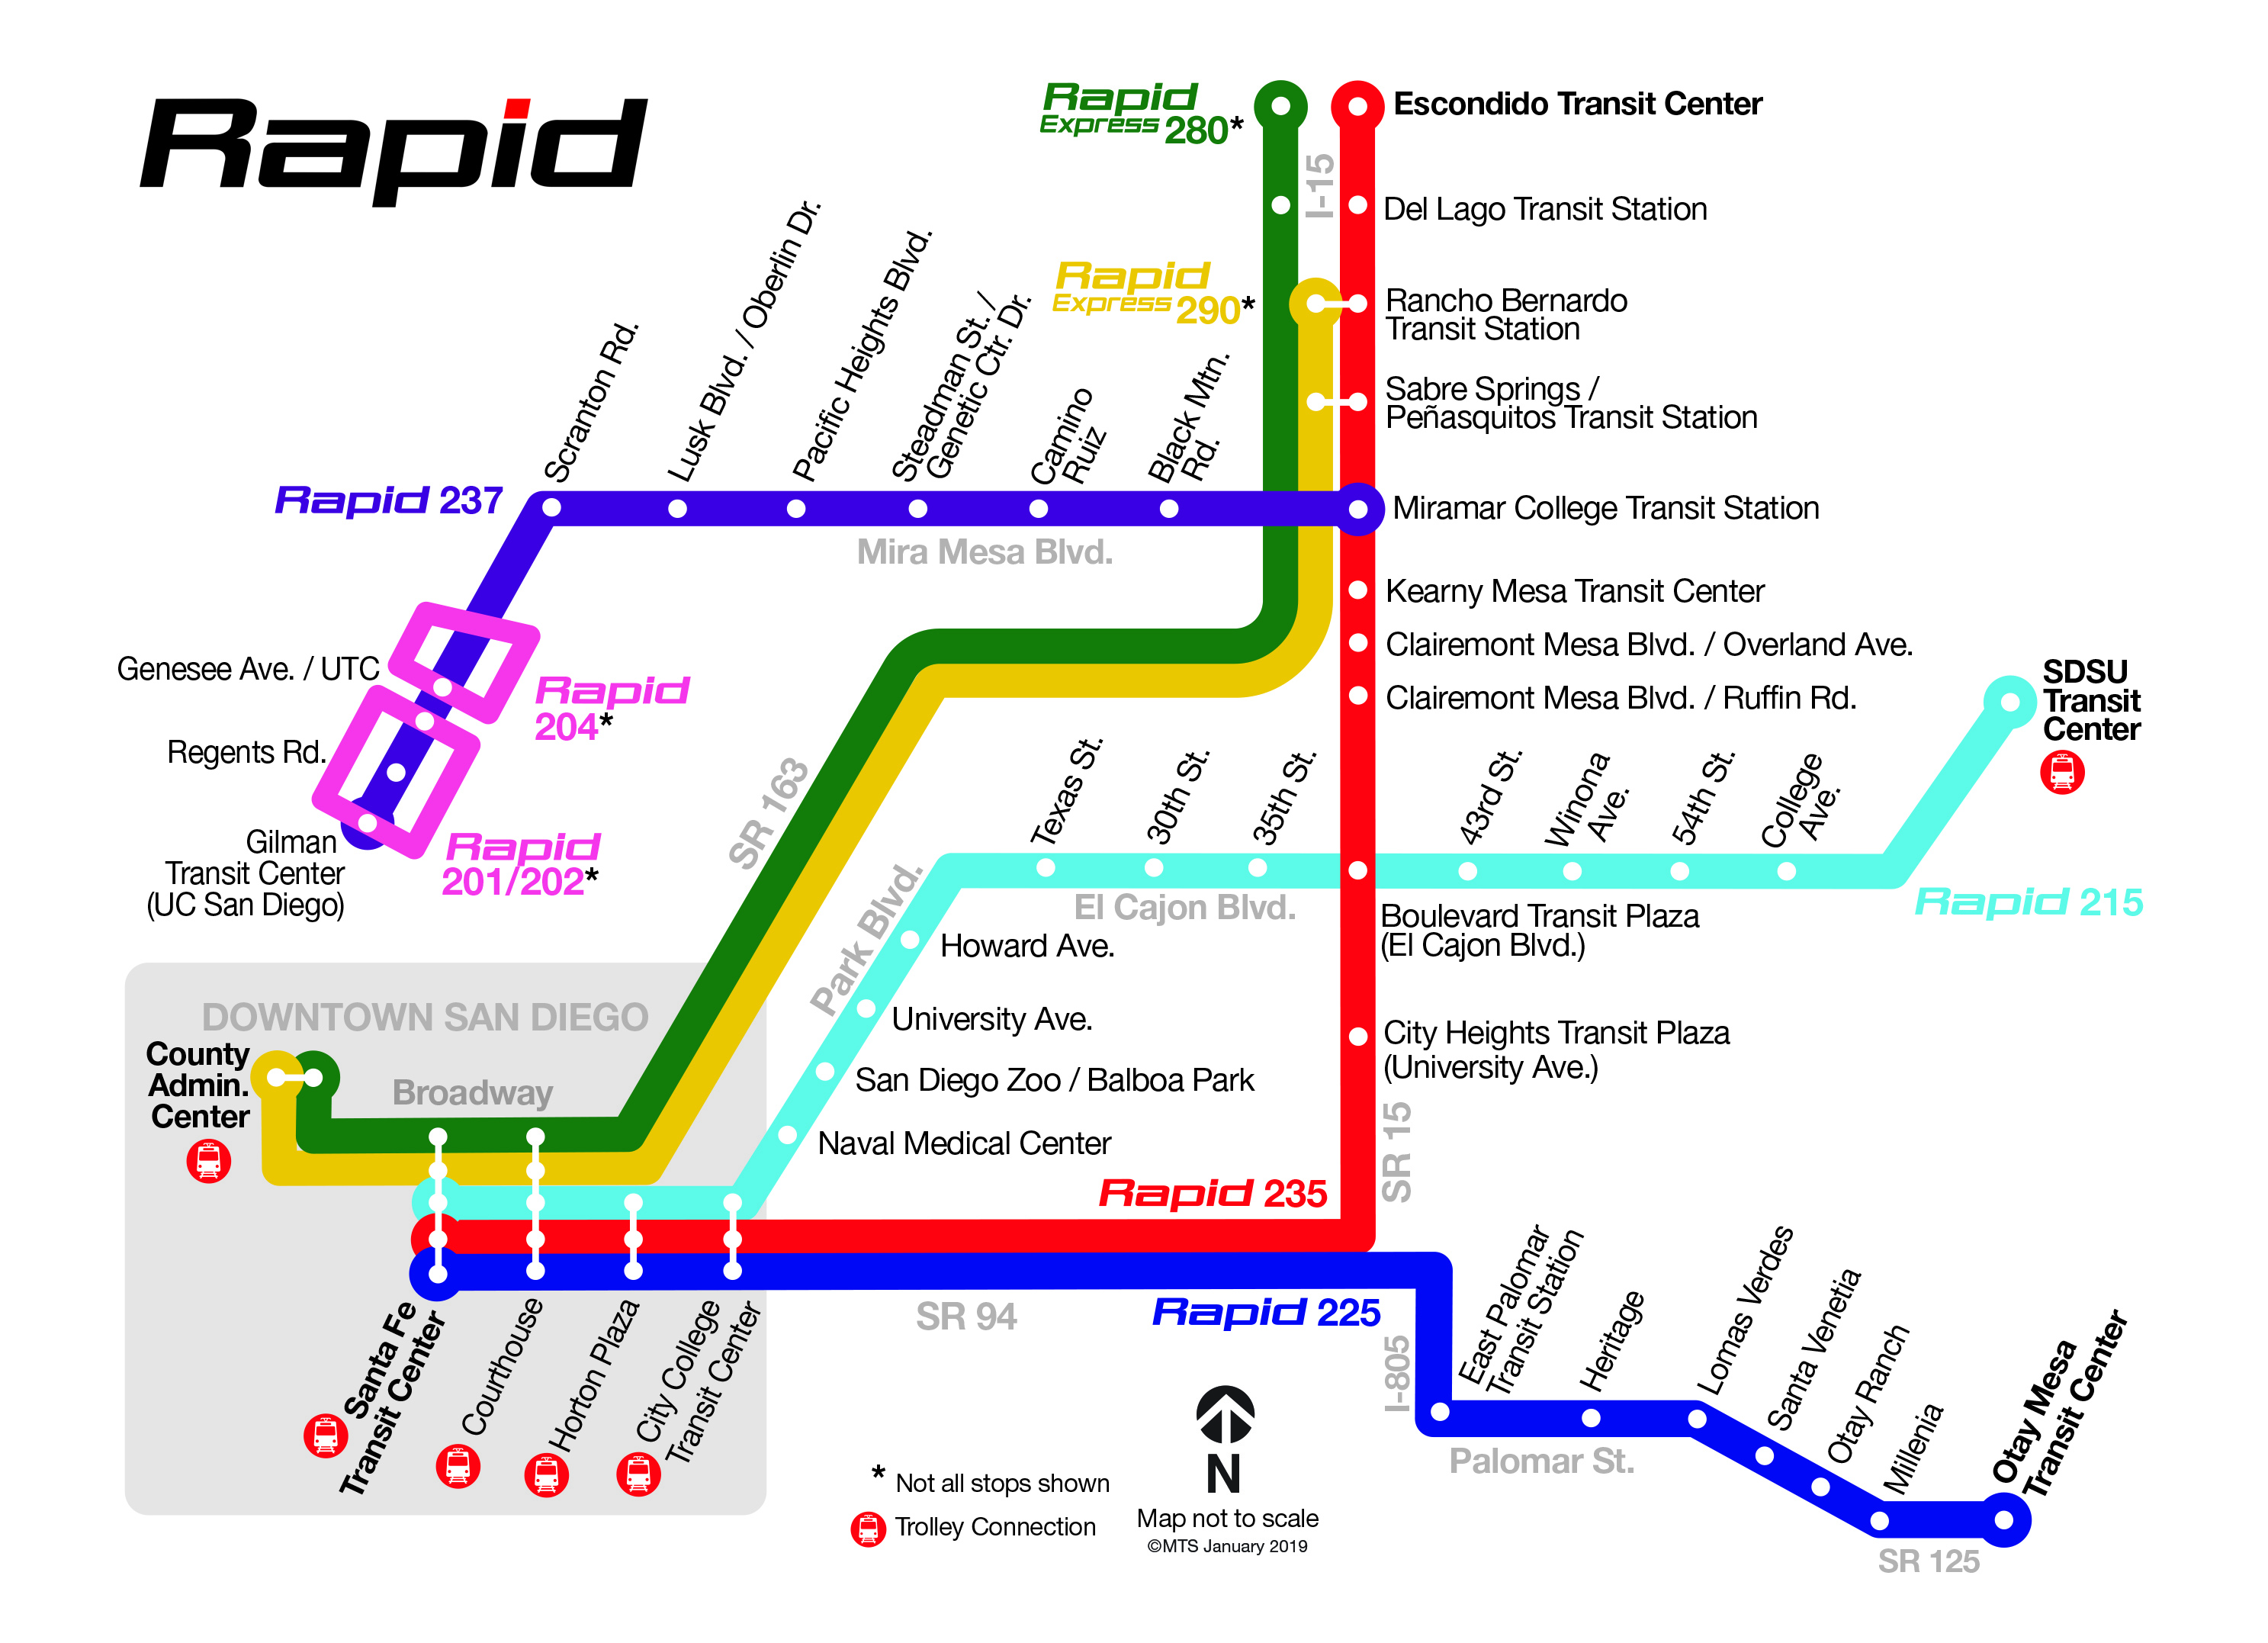 Rapid 237 express bus line